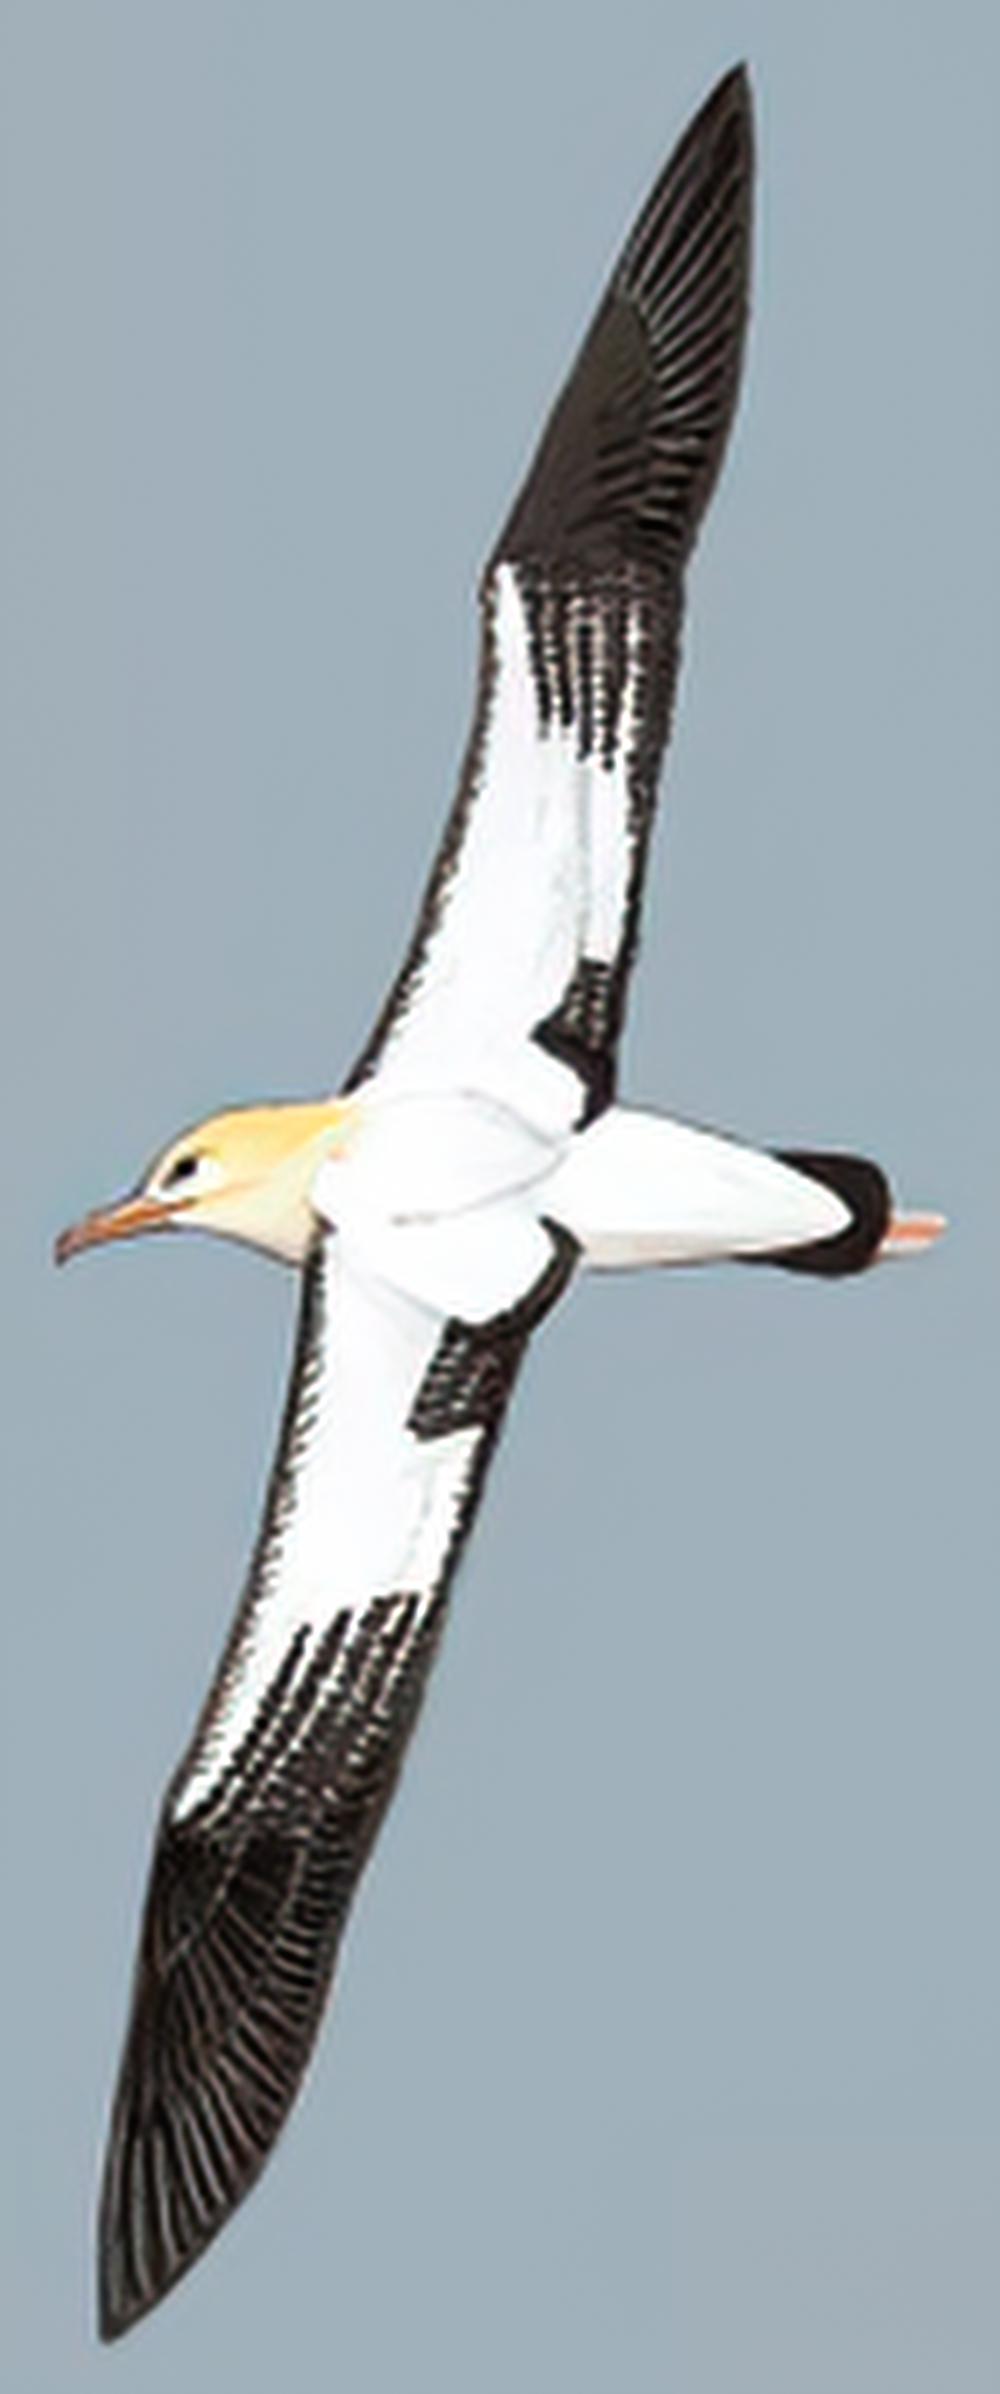 短尾信天翁 / Short-tailed Albatross / Phoebastria albatrus